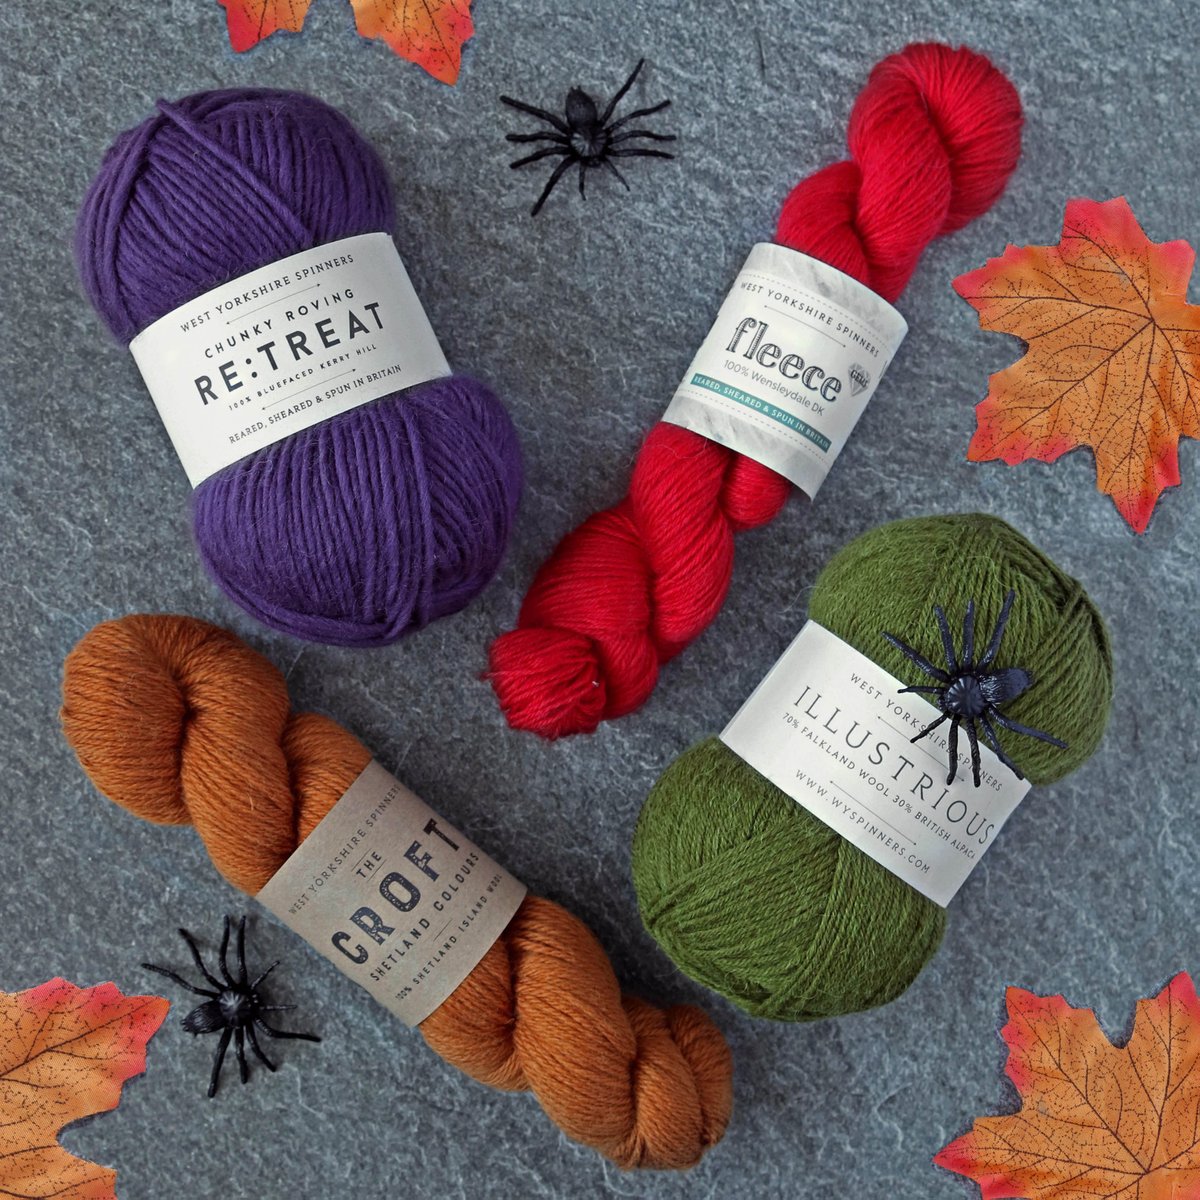 🎃🕷️Happy Halloween🕷️🎃 It's all a bit spooky here at WYS HQ 👻 
#colourinspo #halloween2018 #halloween #pumpkin #trickortreat #wensleydale #illustrious #britishalpaca #bluefacedkerryhill #retreat #fleece #autumn #knitting #britishwool #wyspinners #knit #yarn #knitter